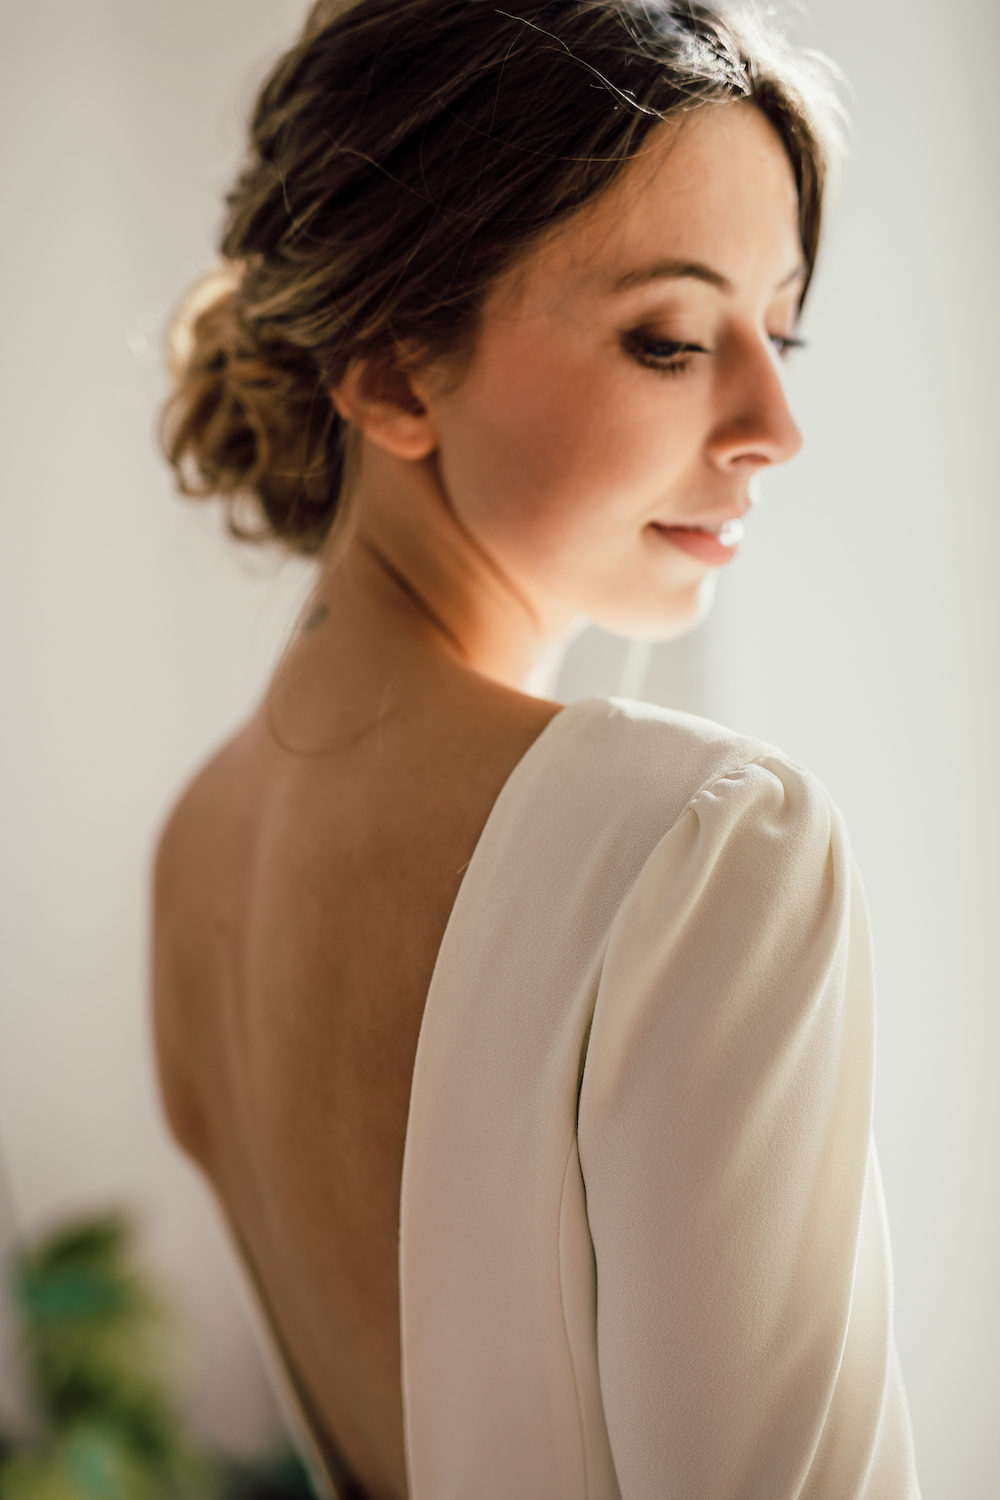 Camille Recolin Collection Civile 2018 - Robes de mariée - Blog Mariage Madame C